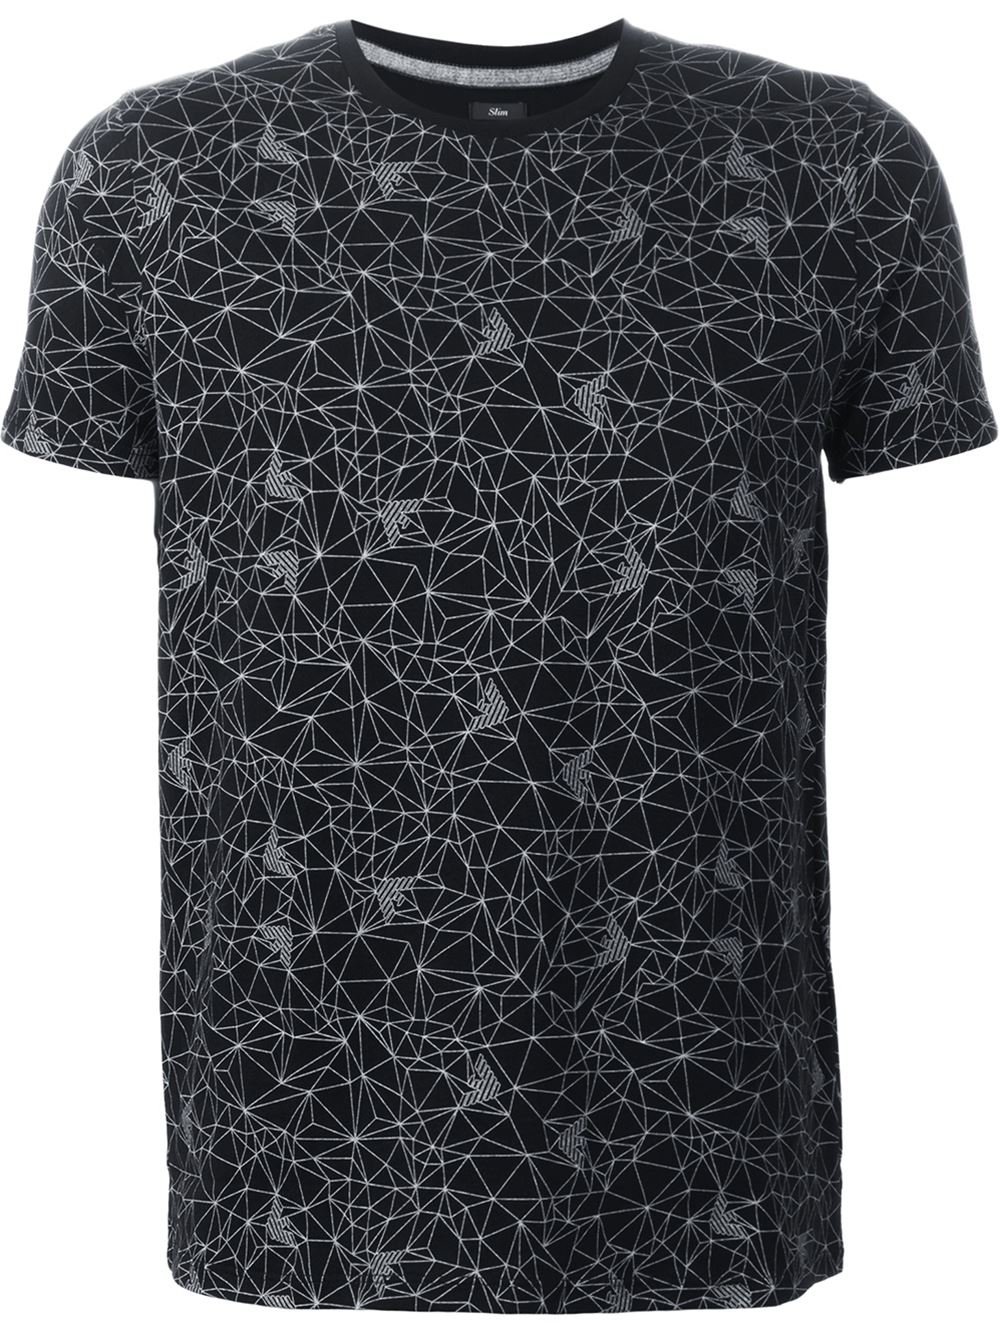 Lyst - Armani Jeans Geometric Pattern T-shirt in Black for Men